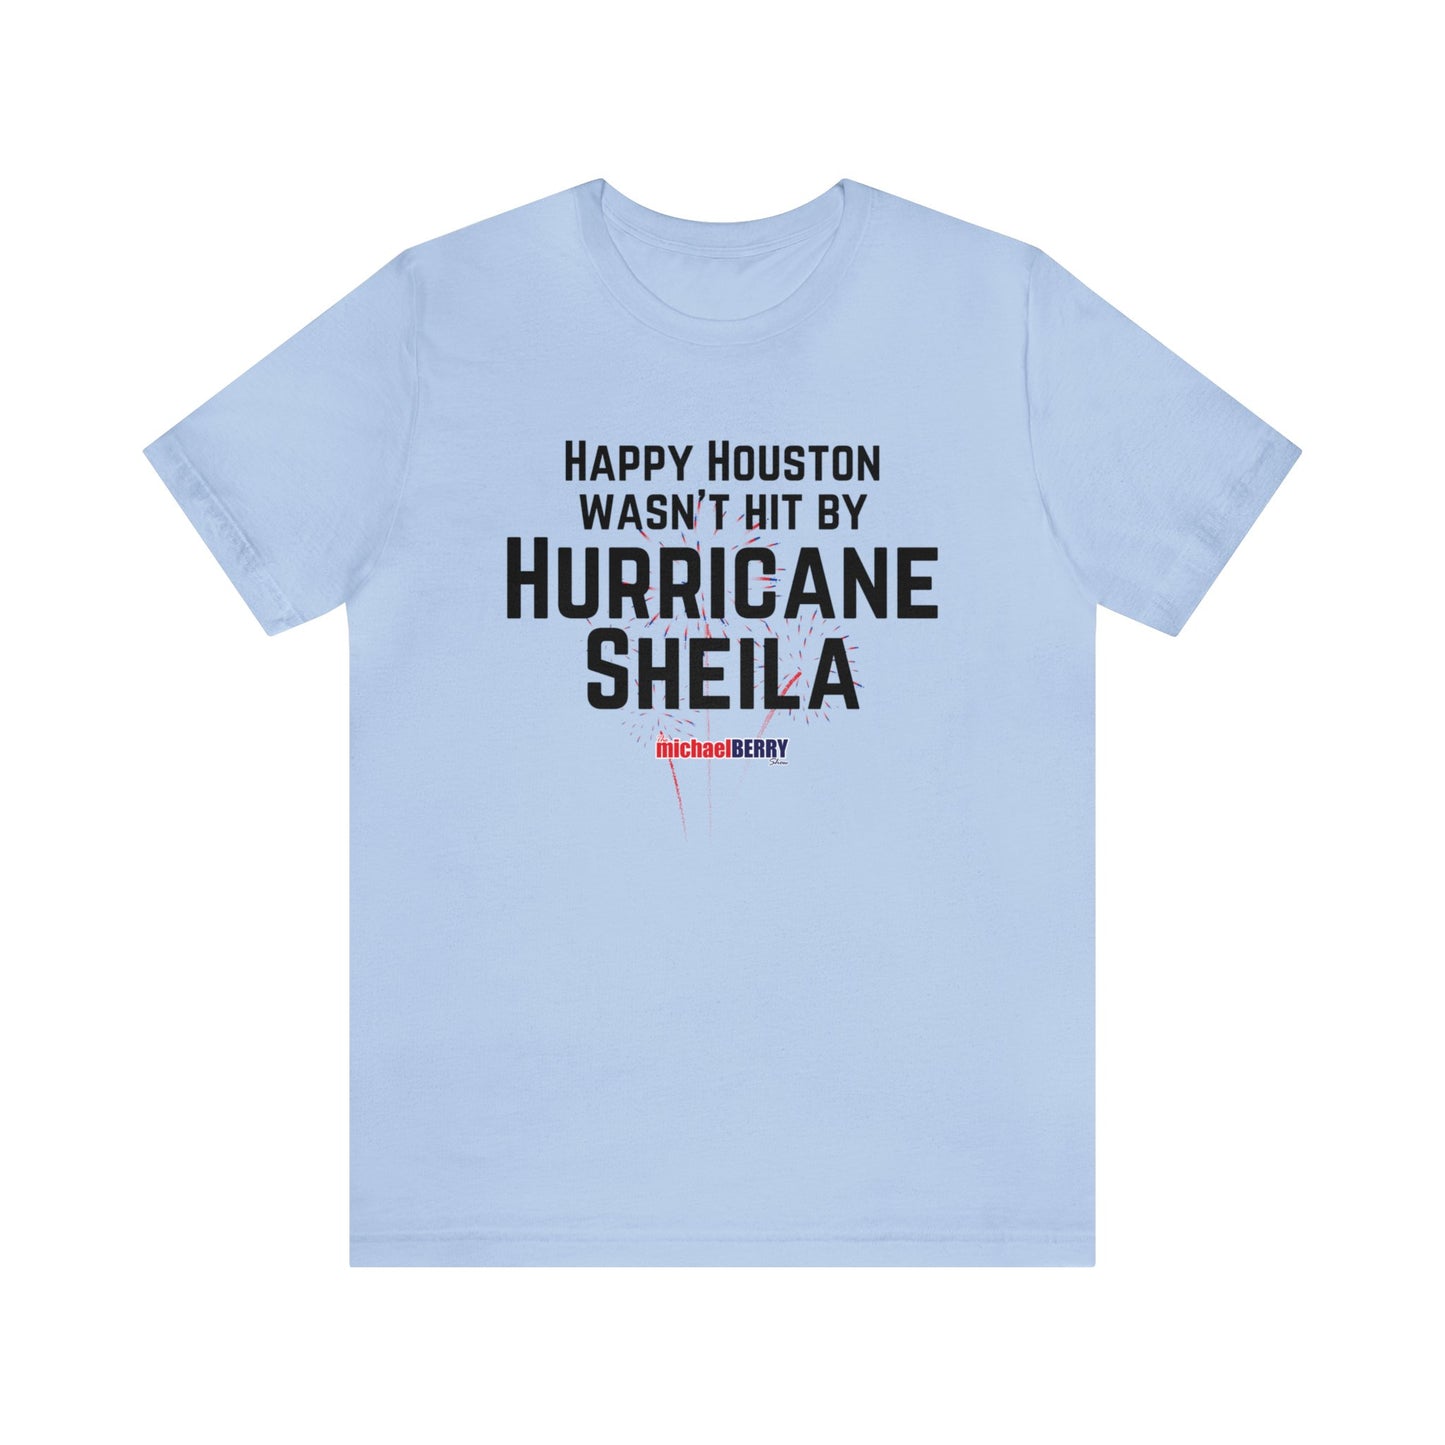 Happy Houston wasn't hit by Hurricane Sheila - Men's Short Sleeve Tee